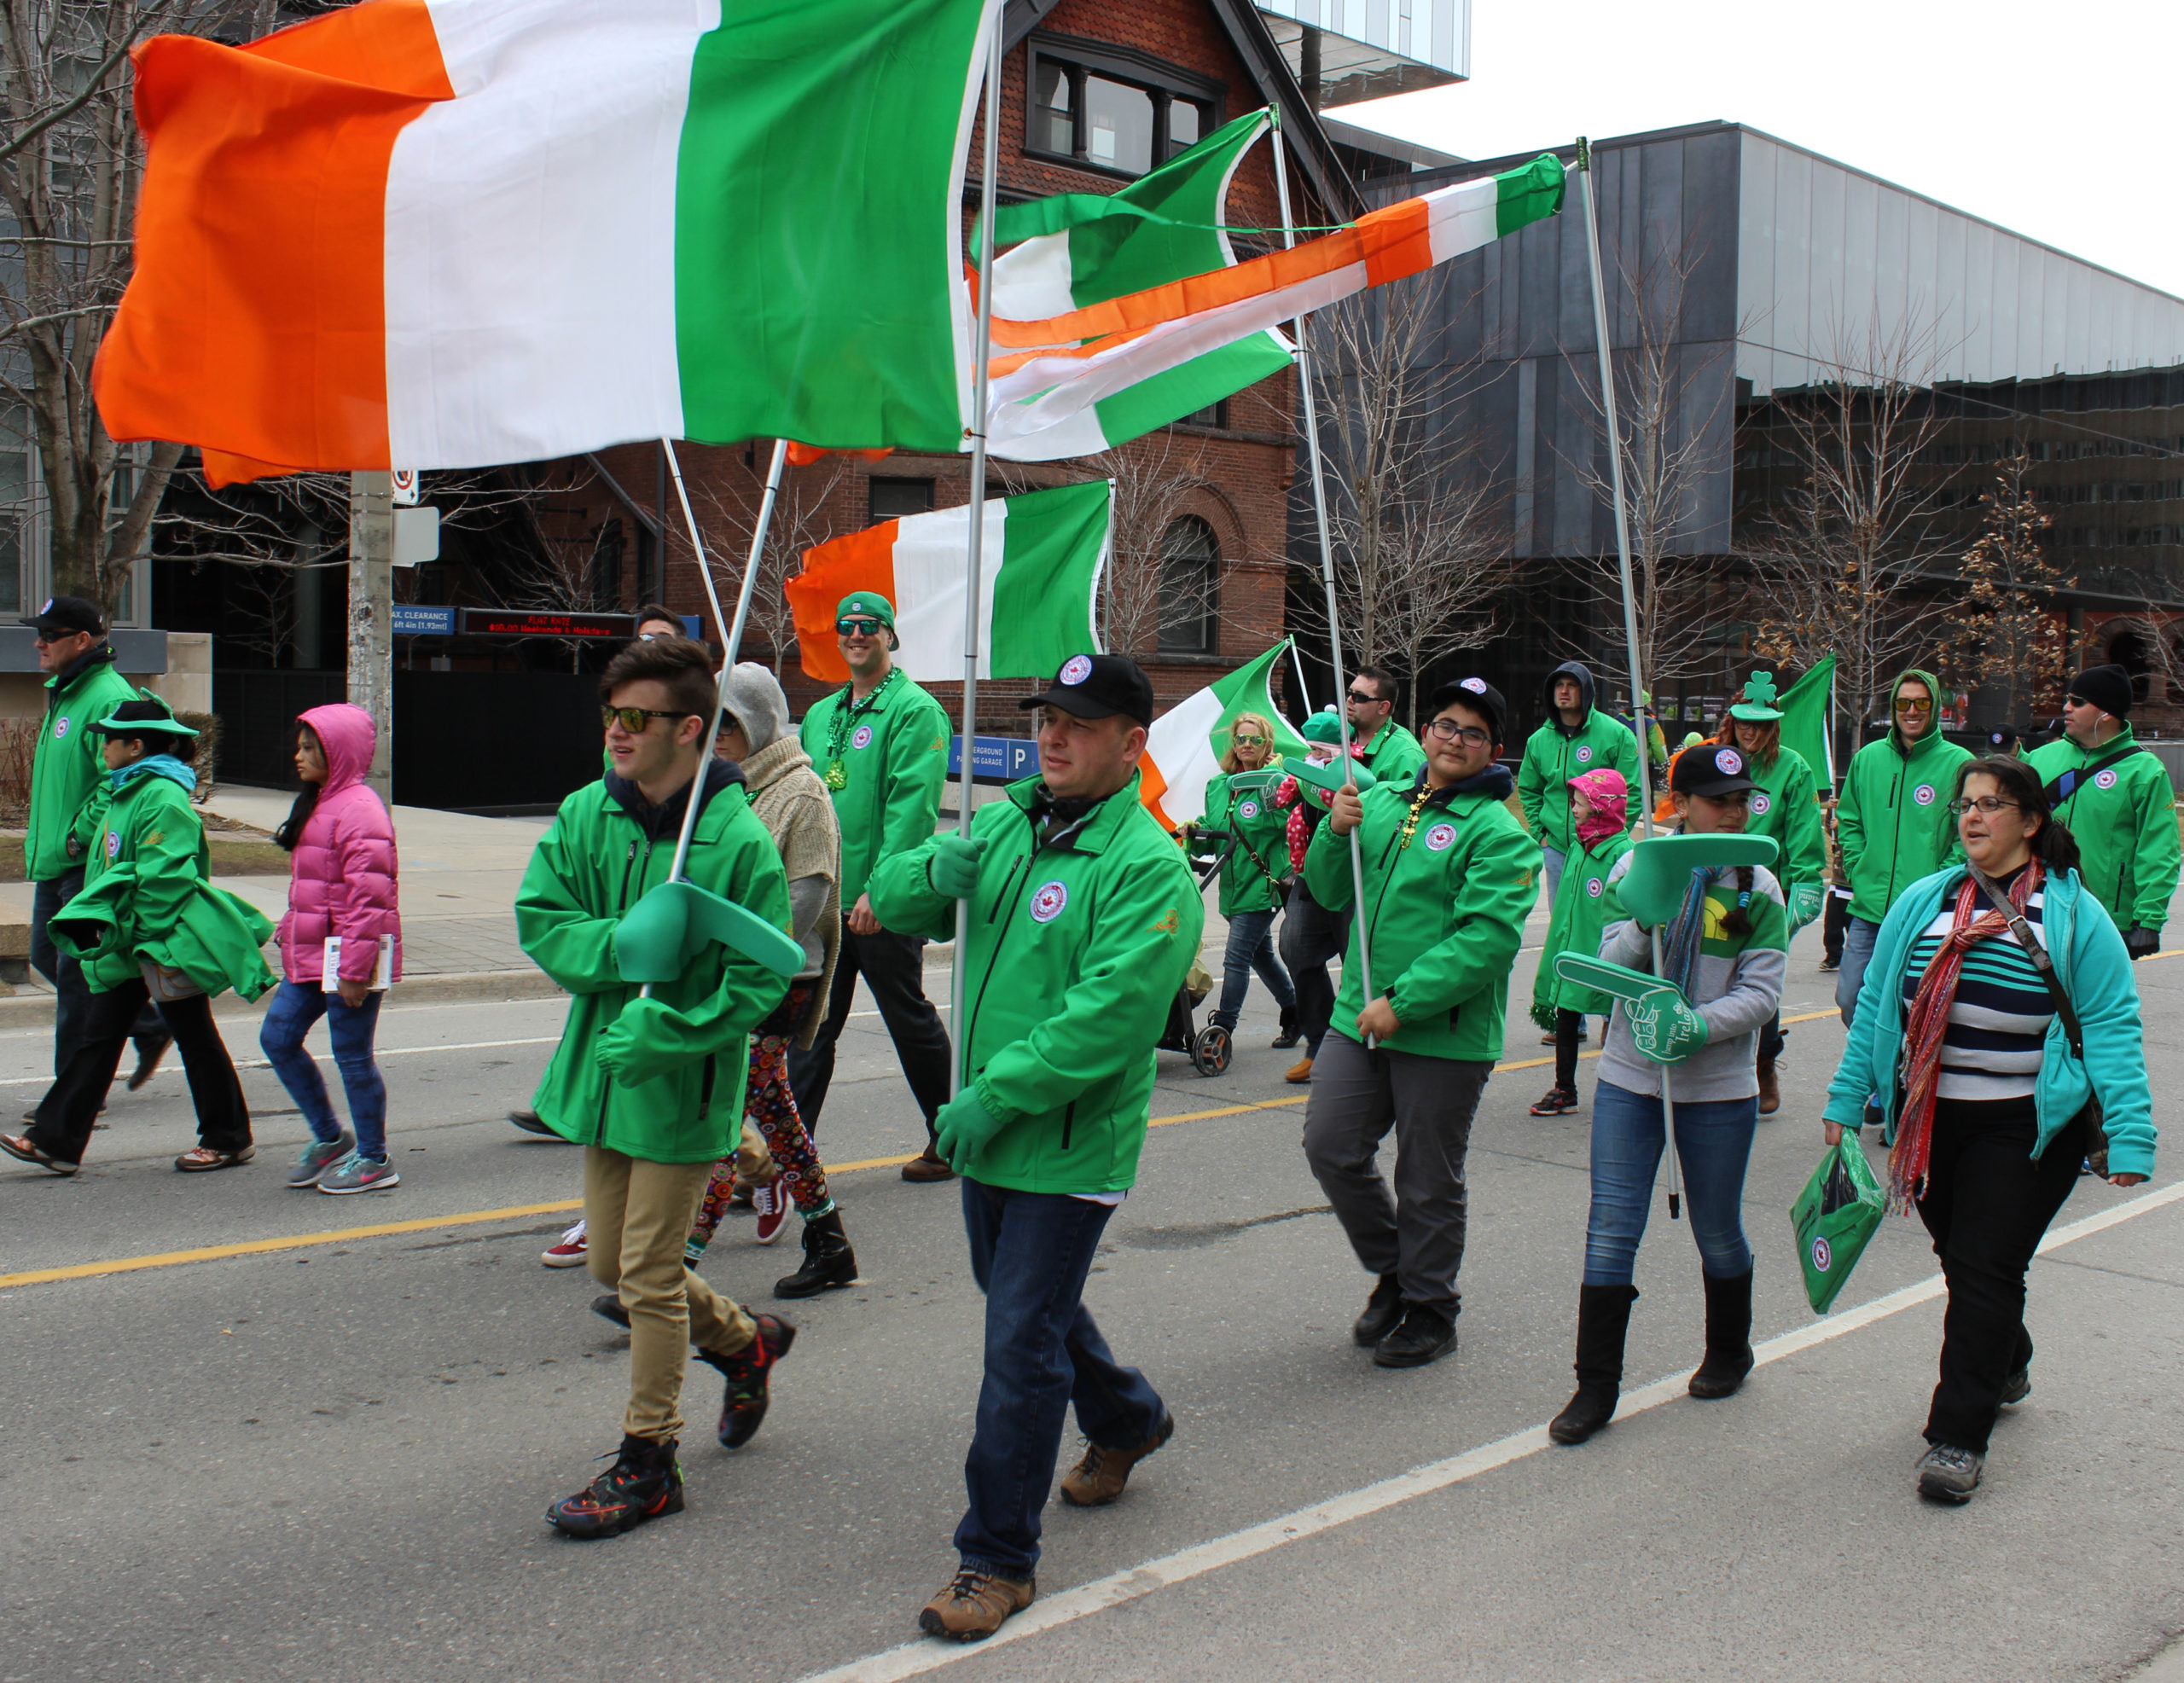 Irish tricolours are flown proudly.